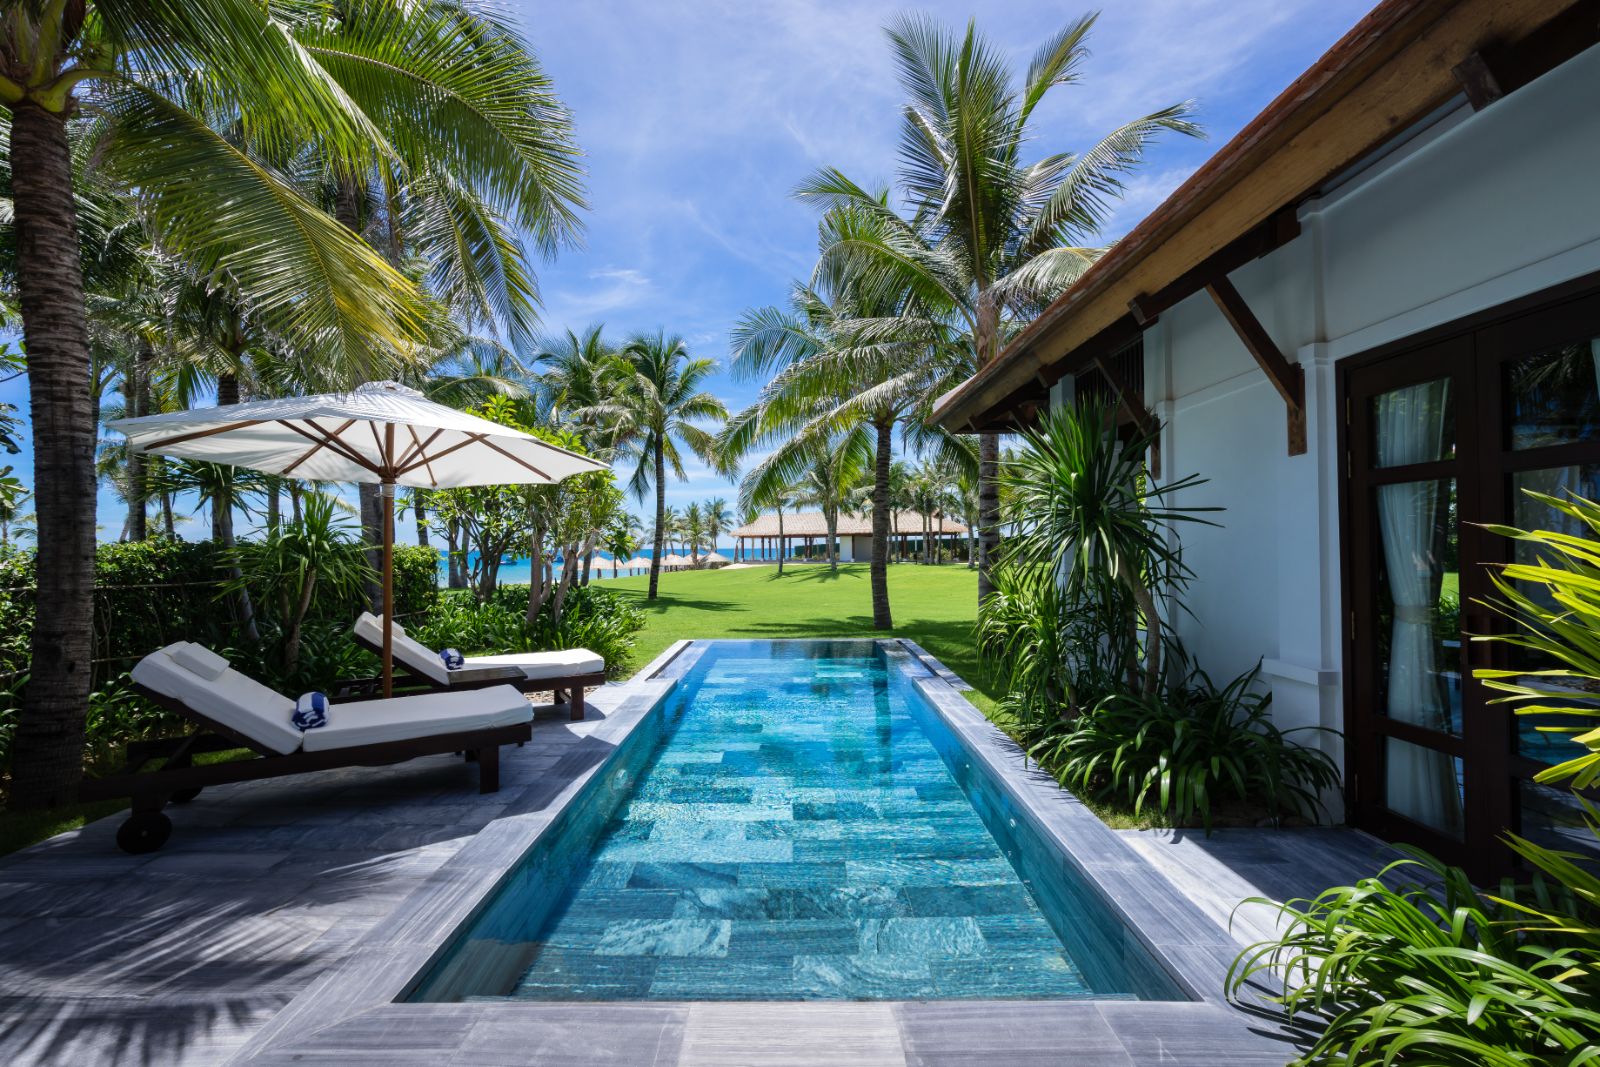 Private villa pool at The Anam resort in Cam Ranh, Vietnam